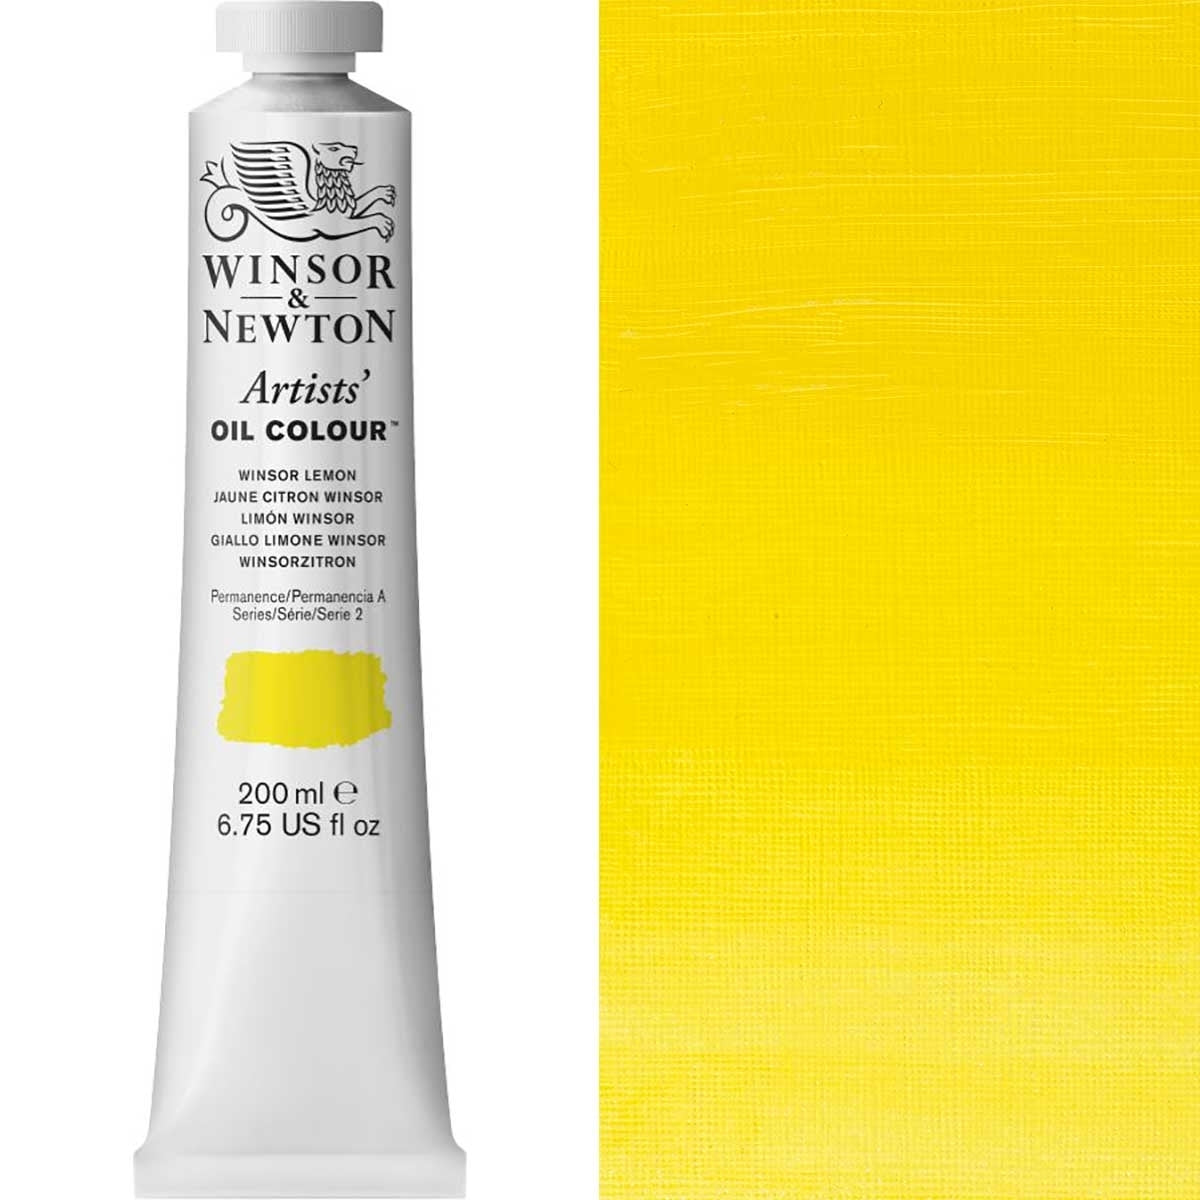 Winsor and Newton - Artists' Oil Colour - 200ml - Winsor Lemon